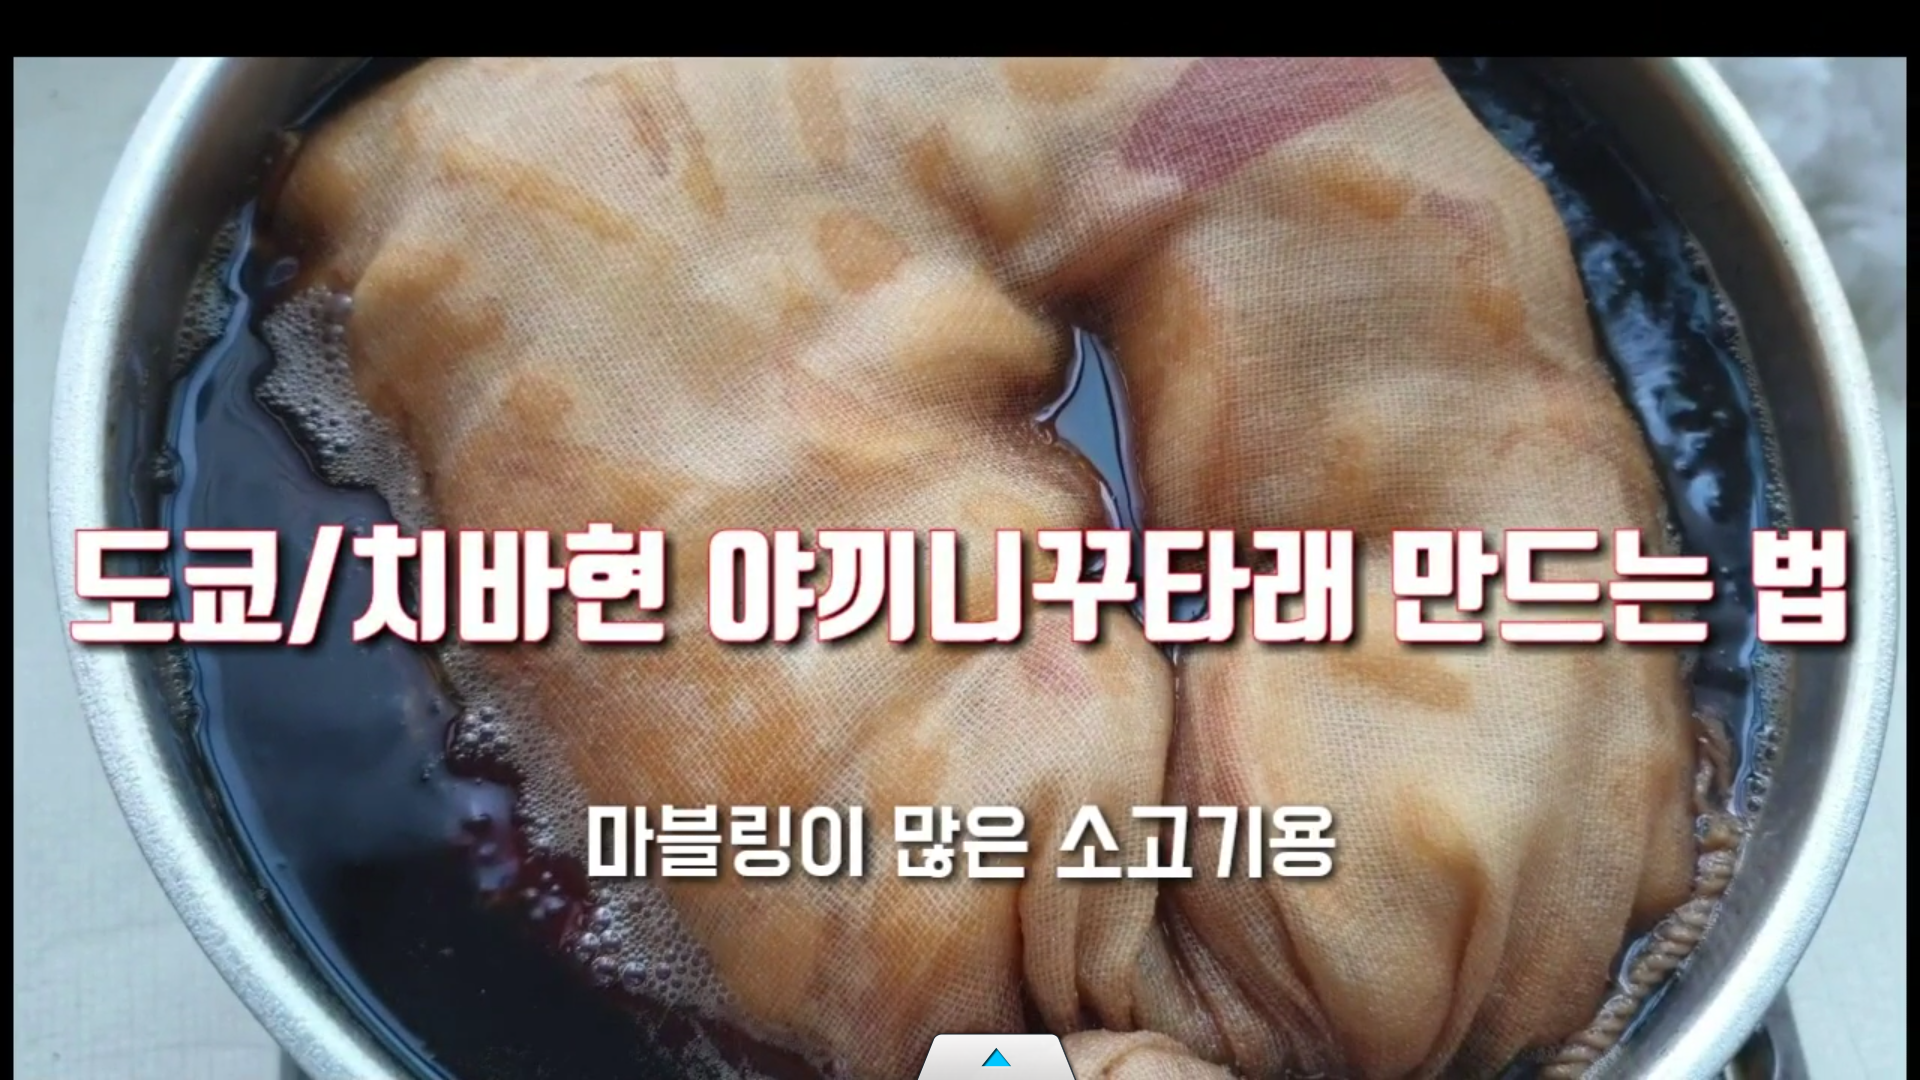 Screenshot_2019-11-17-01-31-34.png : 국내최초 공개 야끼니꾸타레 만들기